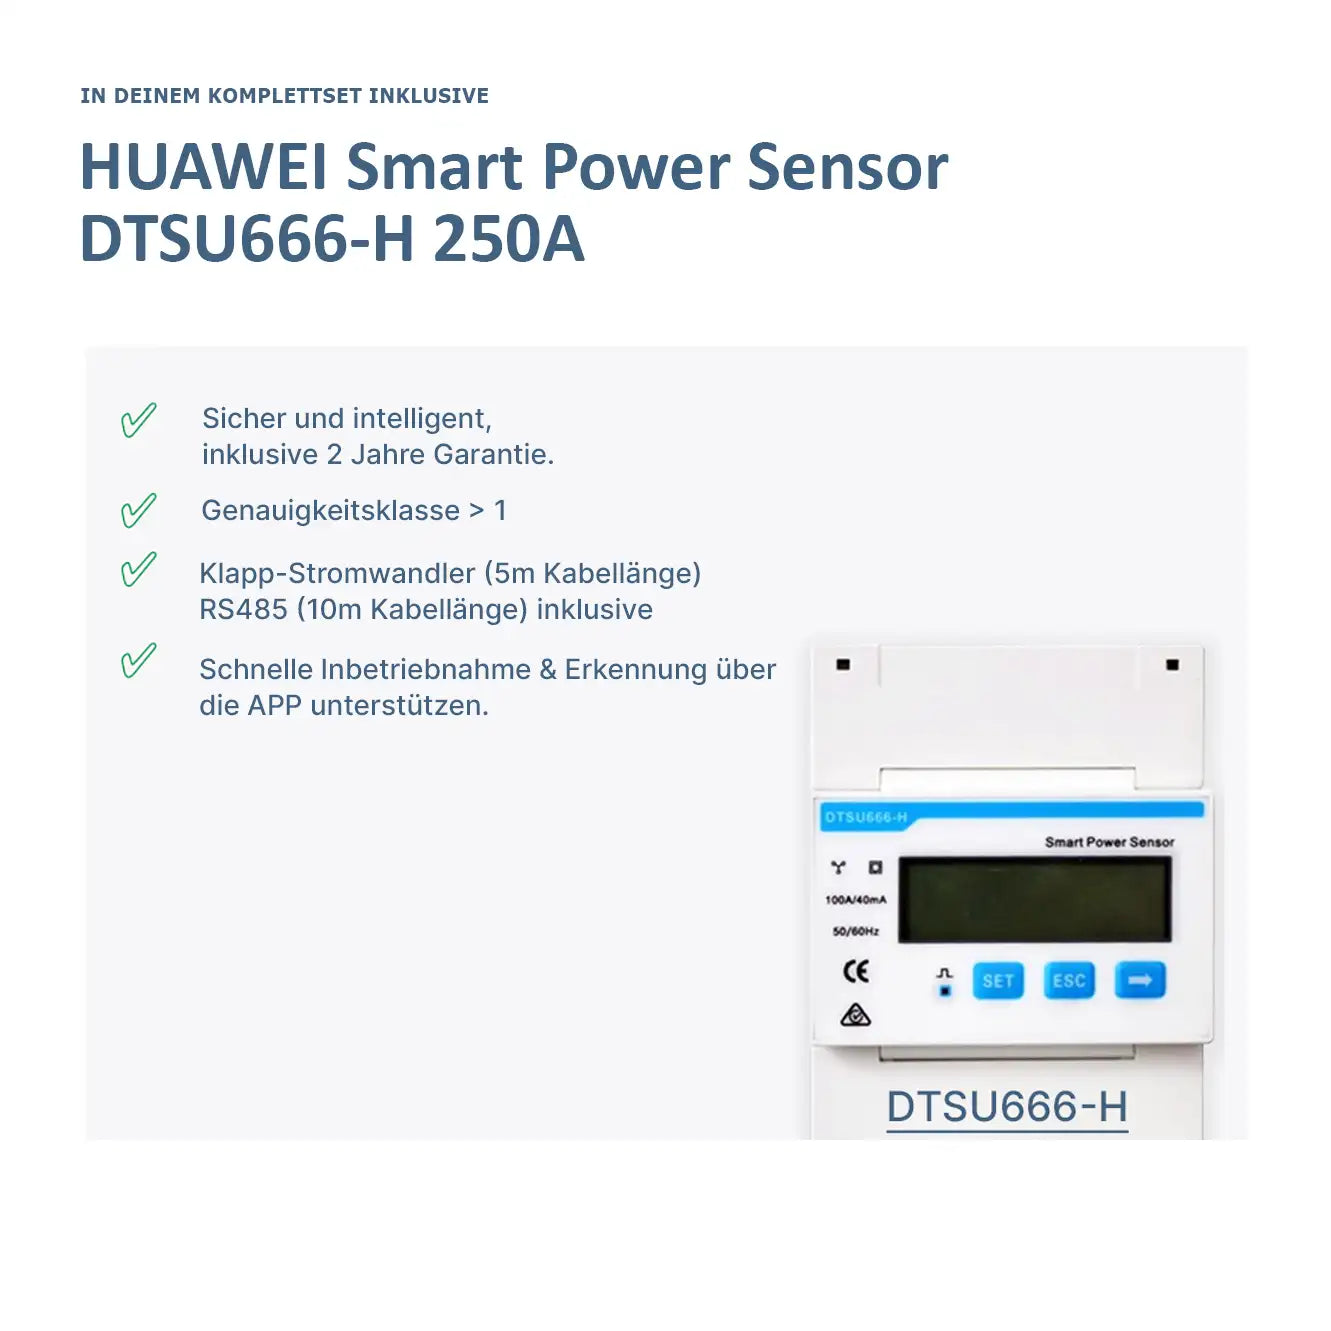 Huawei-Wechselrichter-10KW + Huawei LUNA 2000-10-S0